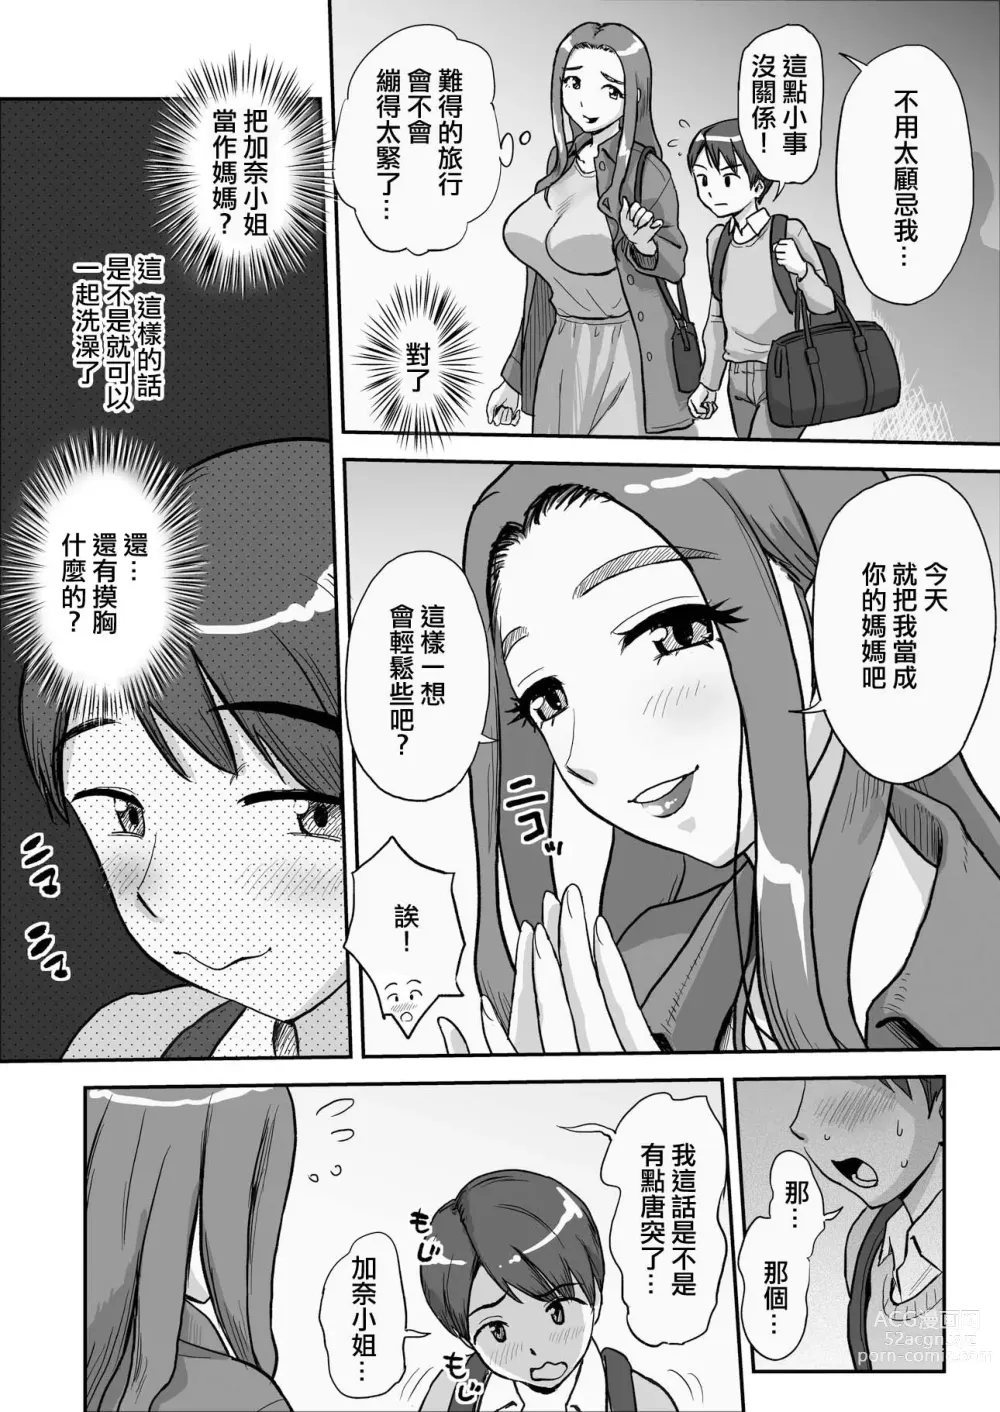 Page 4 of doujinshi 僅此一天的媽媽 這是隻屬於我們...兩人的秘密...哦?....